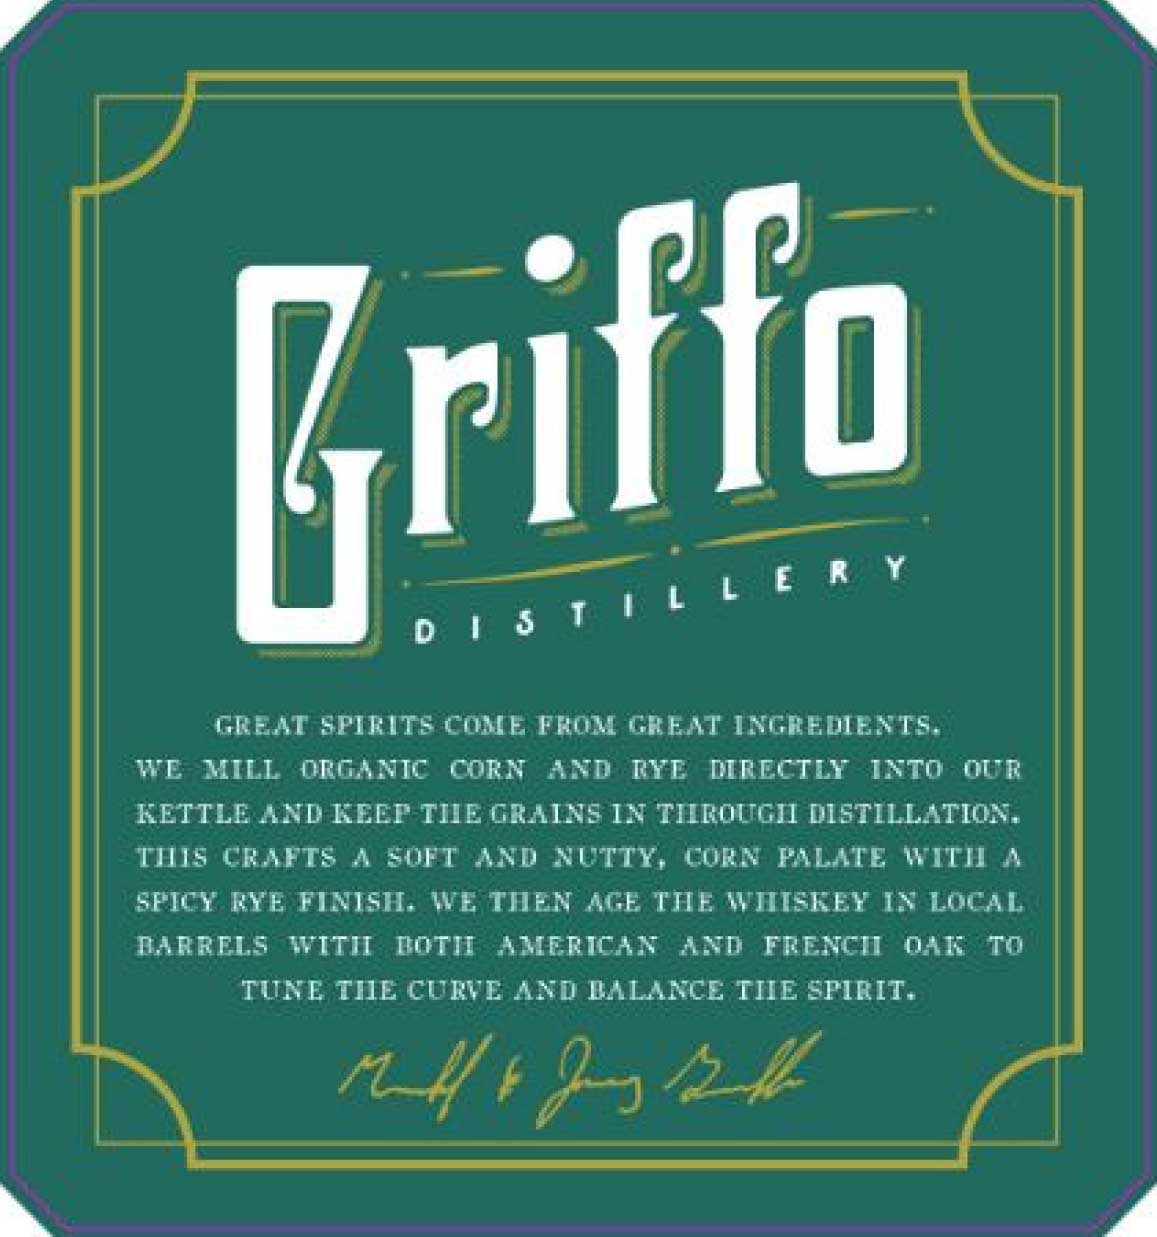 Griffo - Stony Point Whiskey label